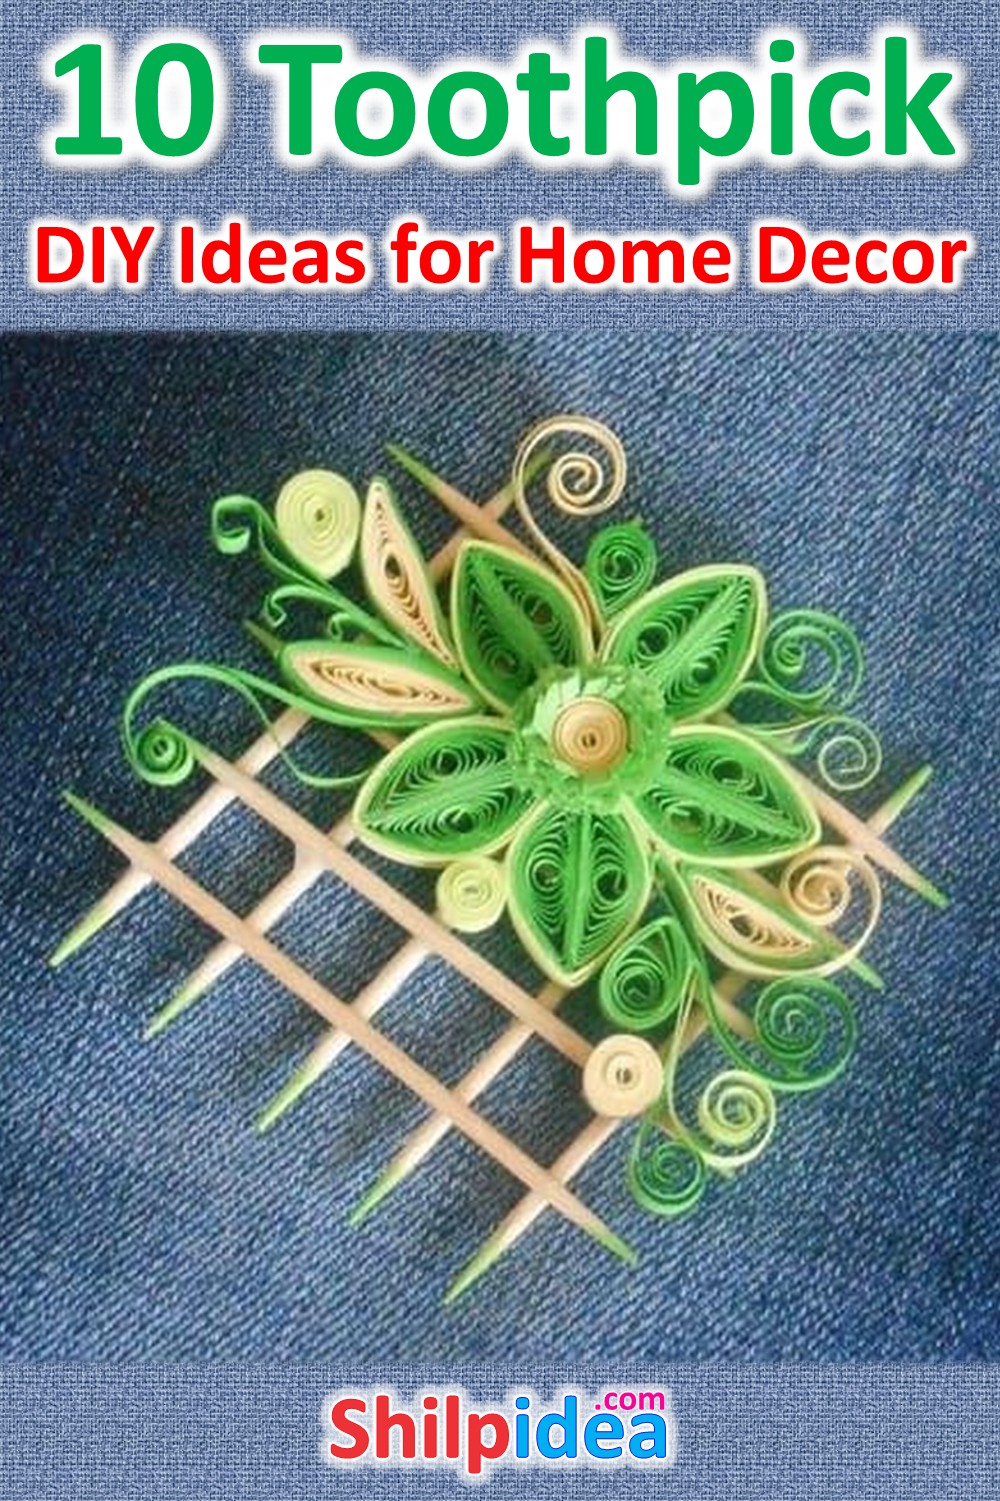 toothpick-diy-ideas-home-decor-shilpidea-pin